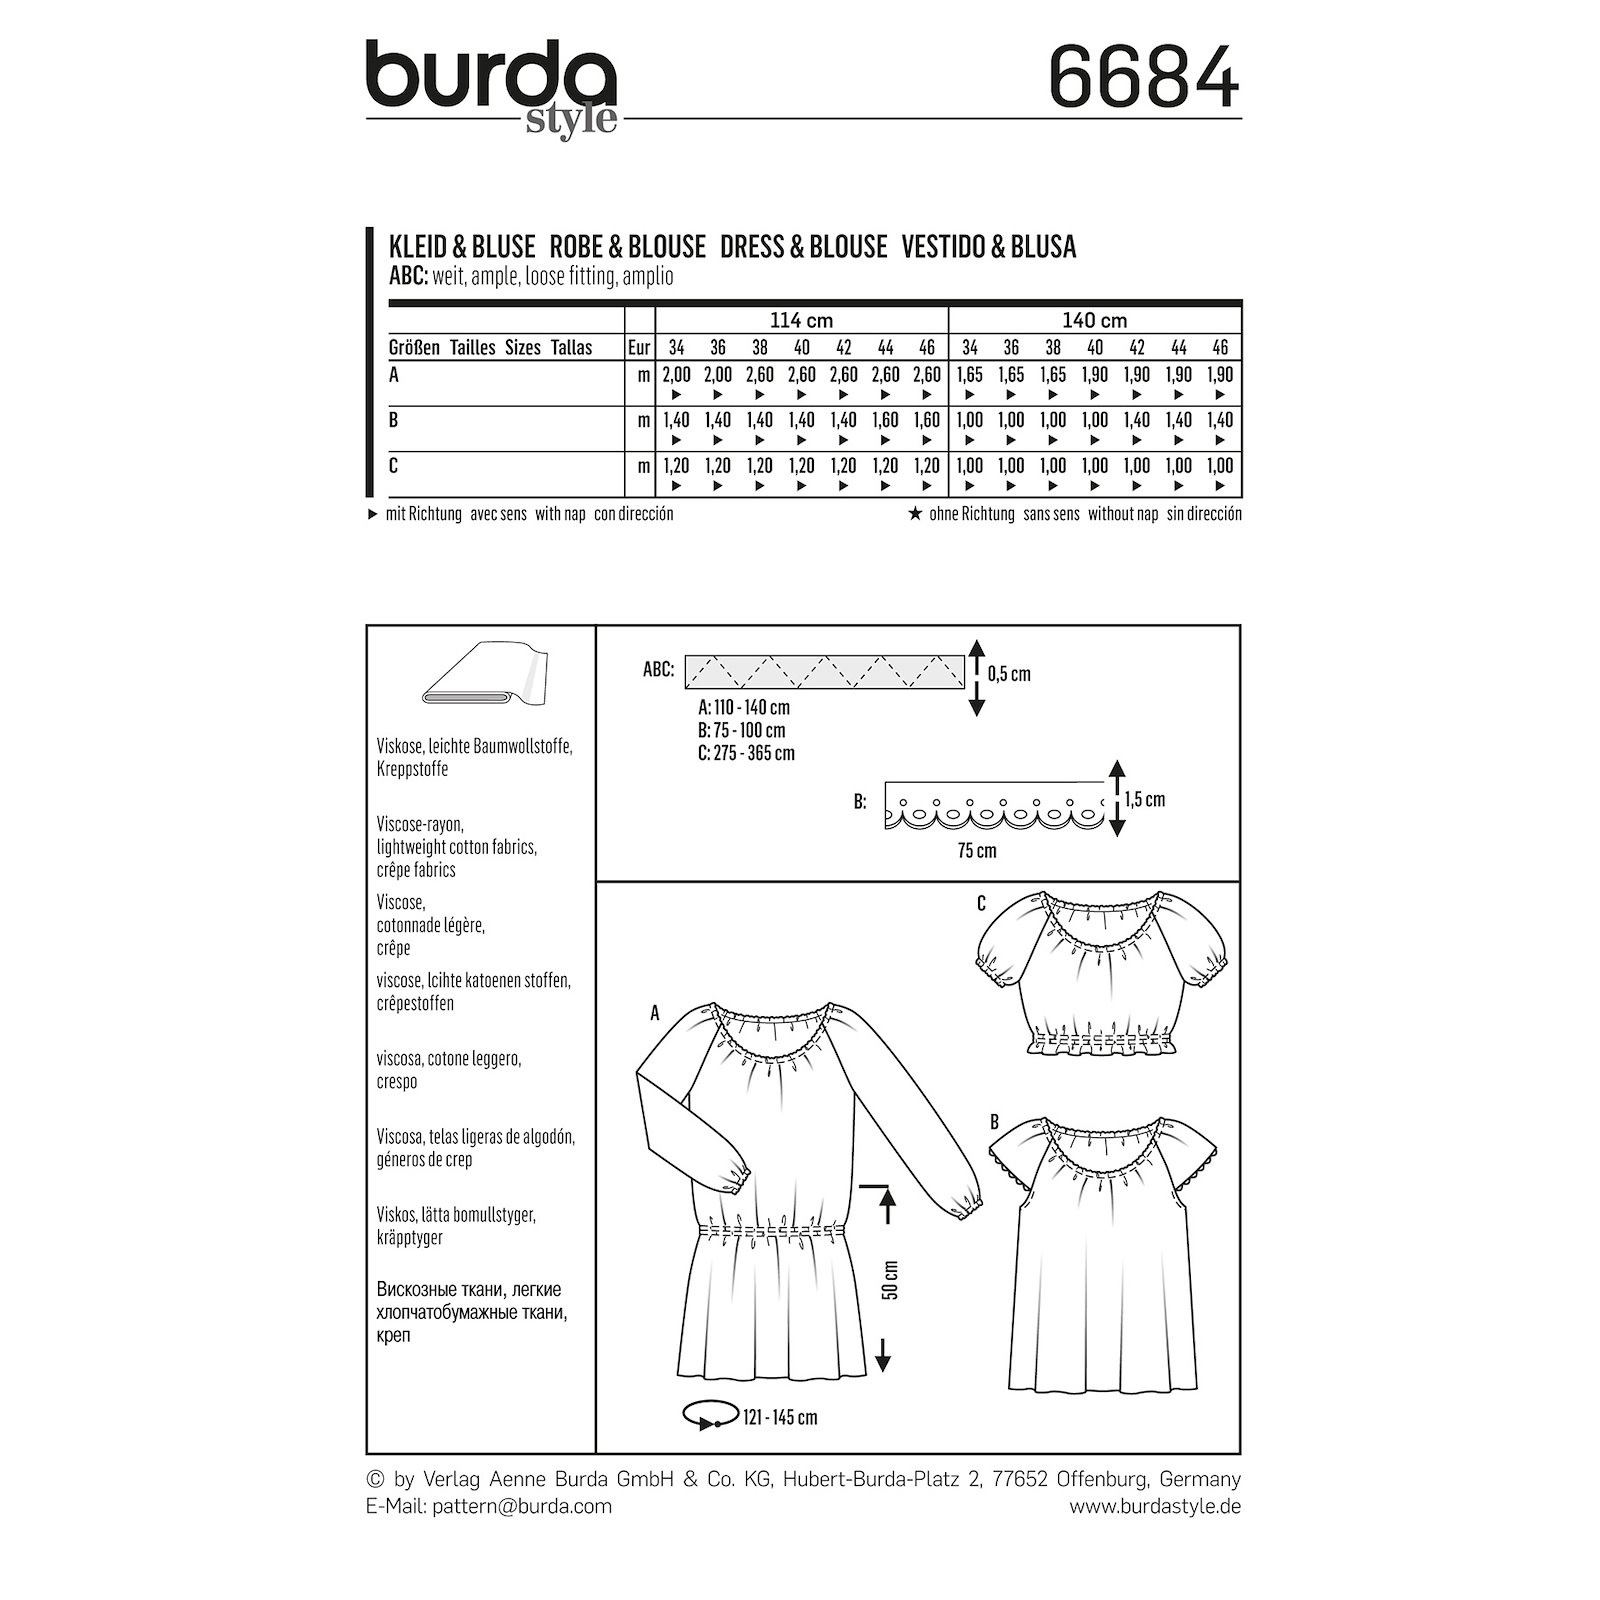 6684 Dress/blouse with elastic hem 34-46 1100144_pack_b